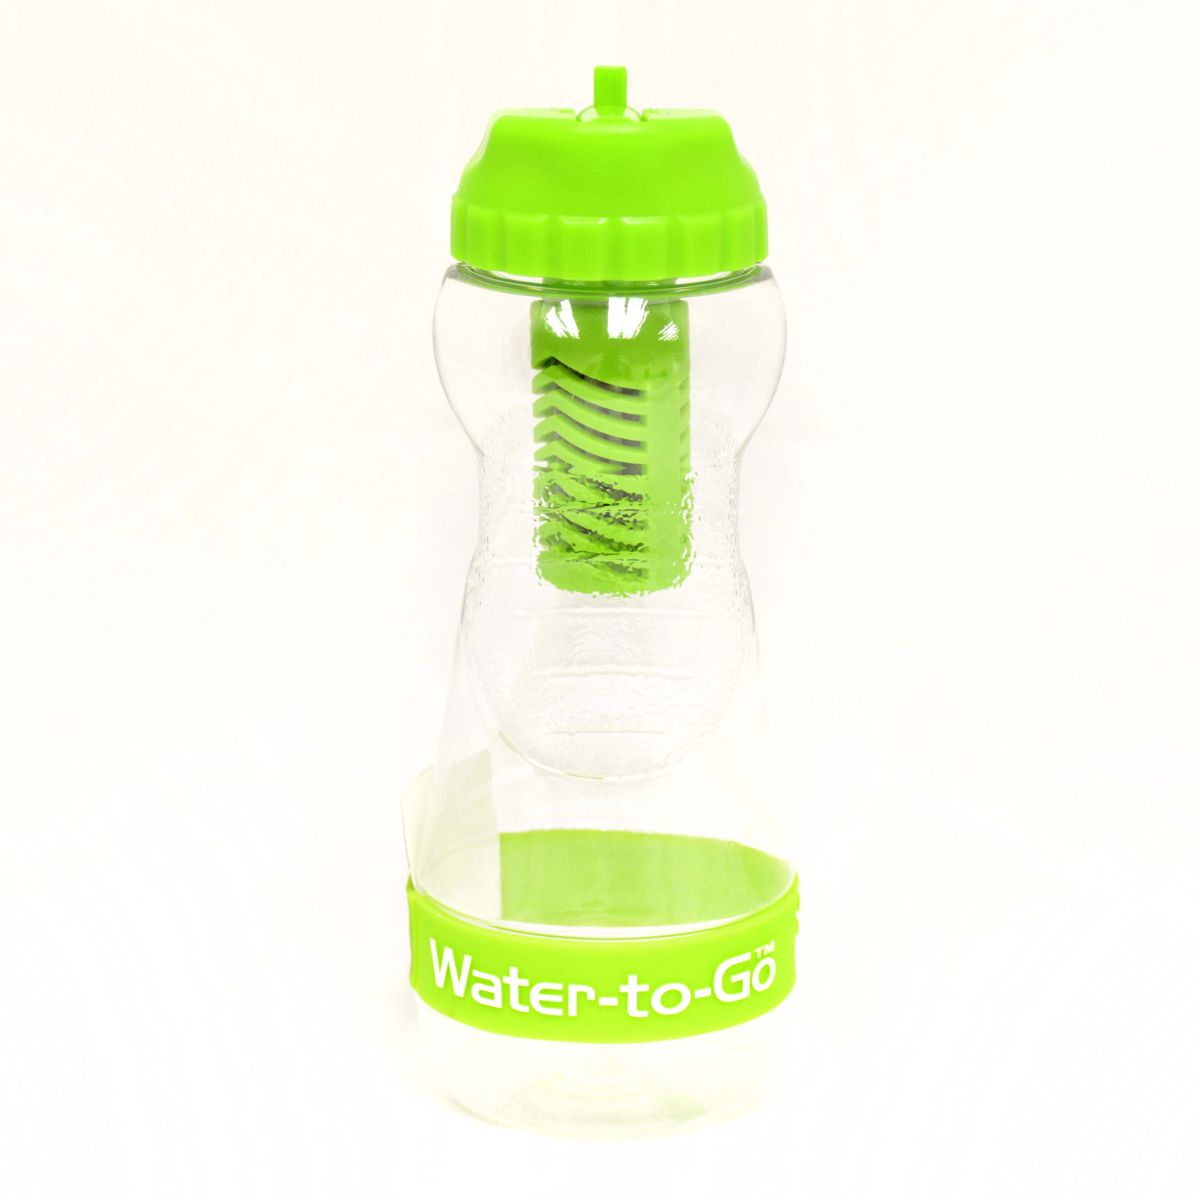 Black GO! Water Bottle GREEN Water-to-GO GOGREEN L-11